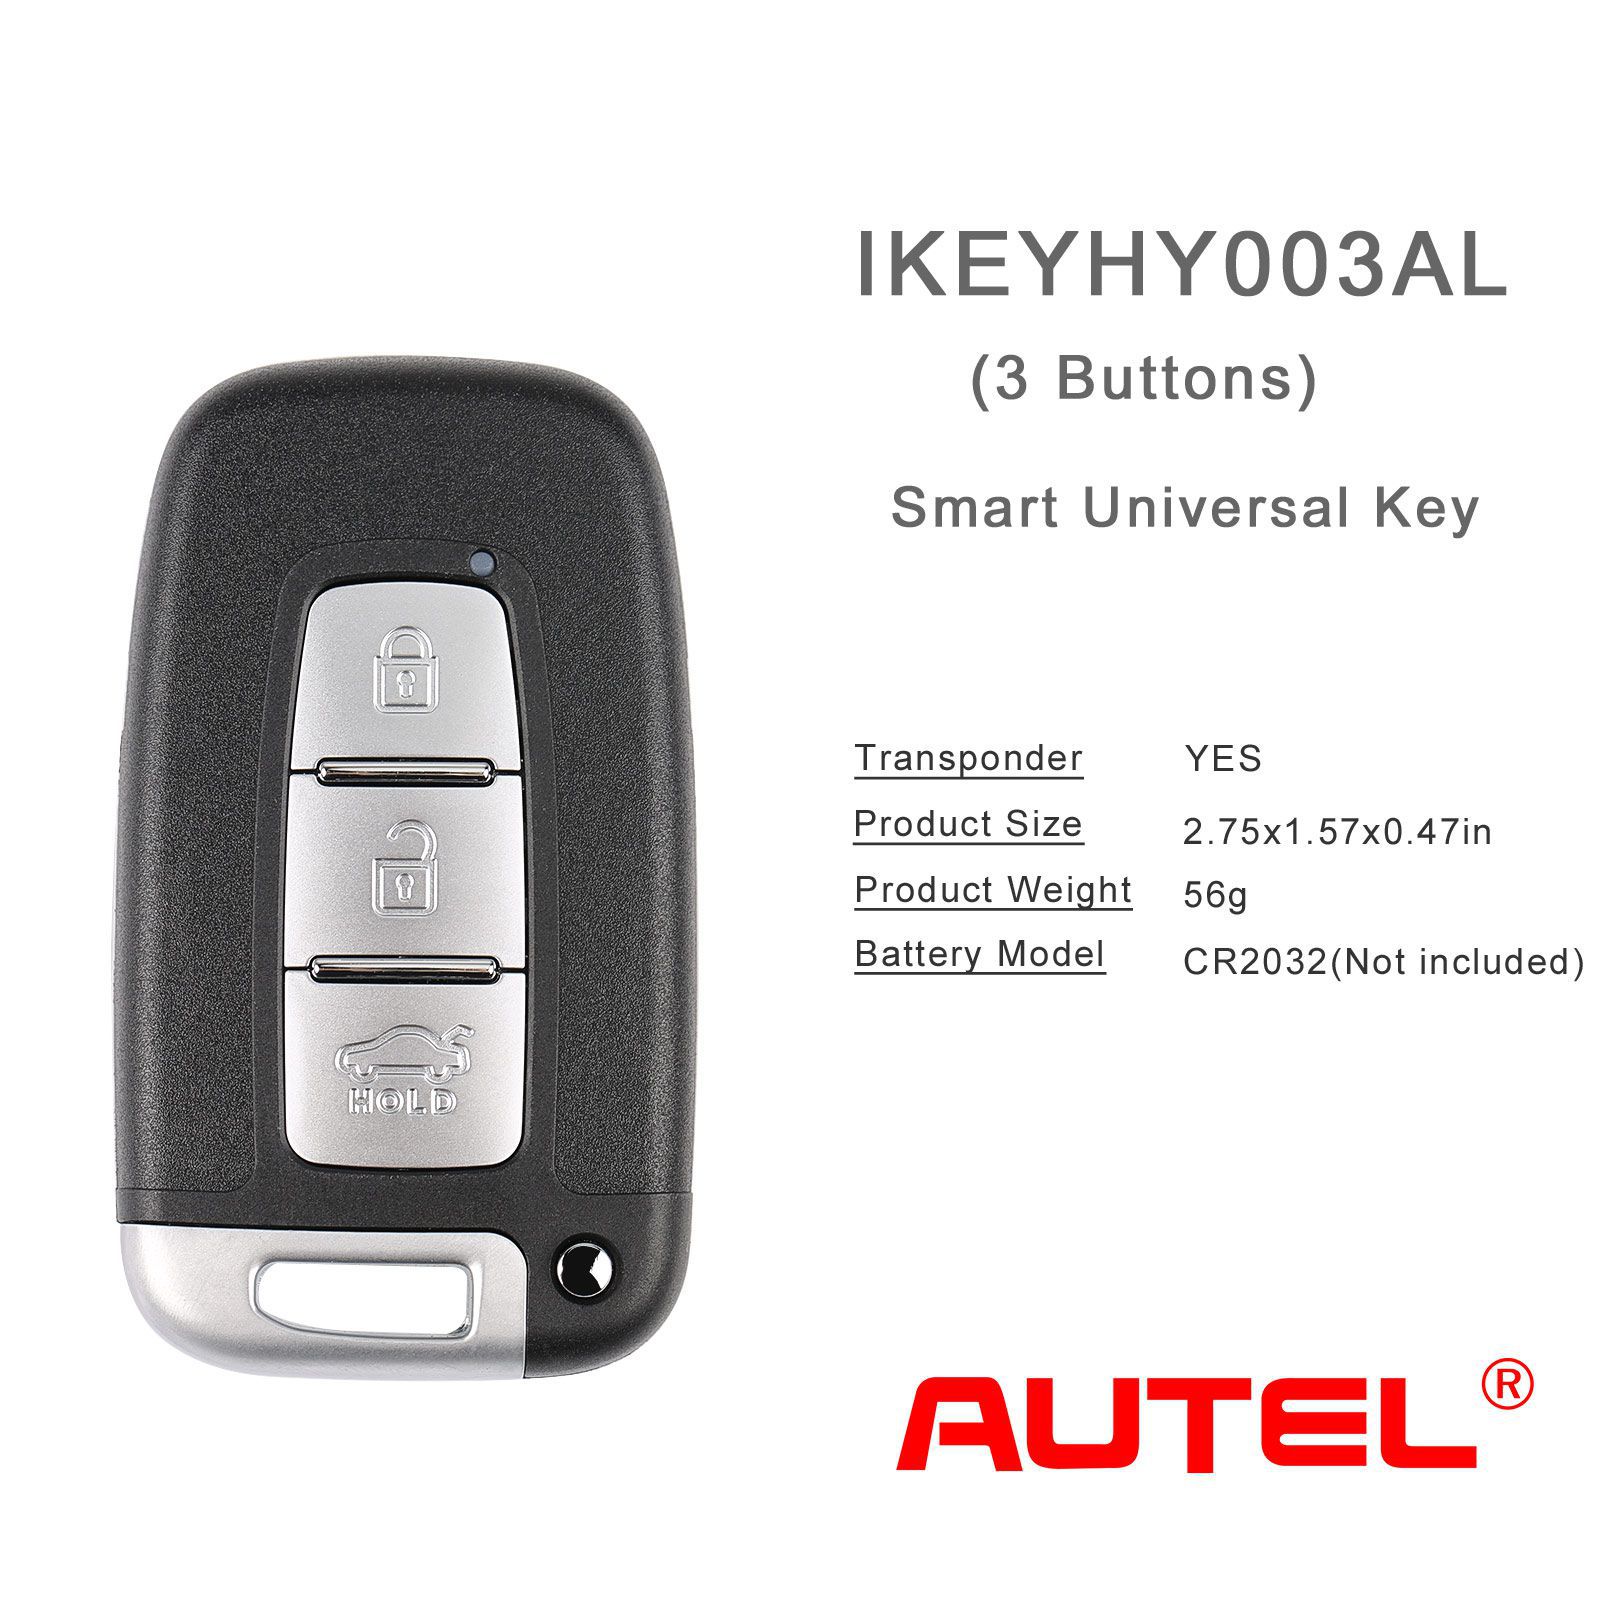 Autel ikeyhy003al Modern 3 boutons clé intelligente universelle 5pcs / lot